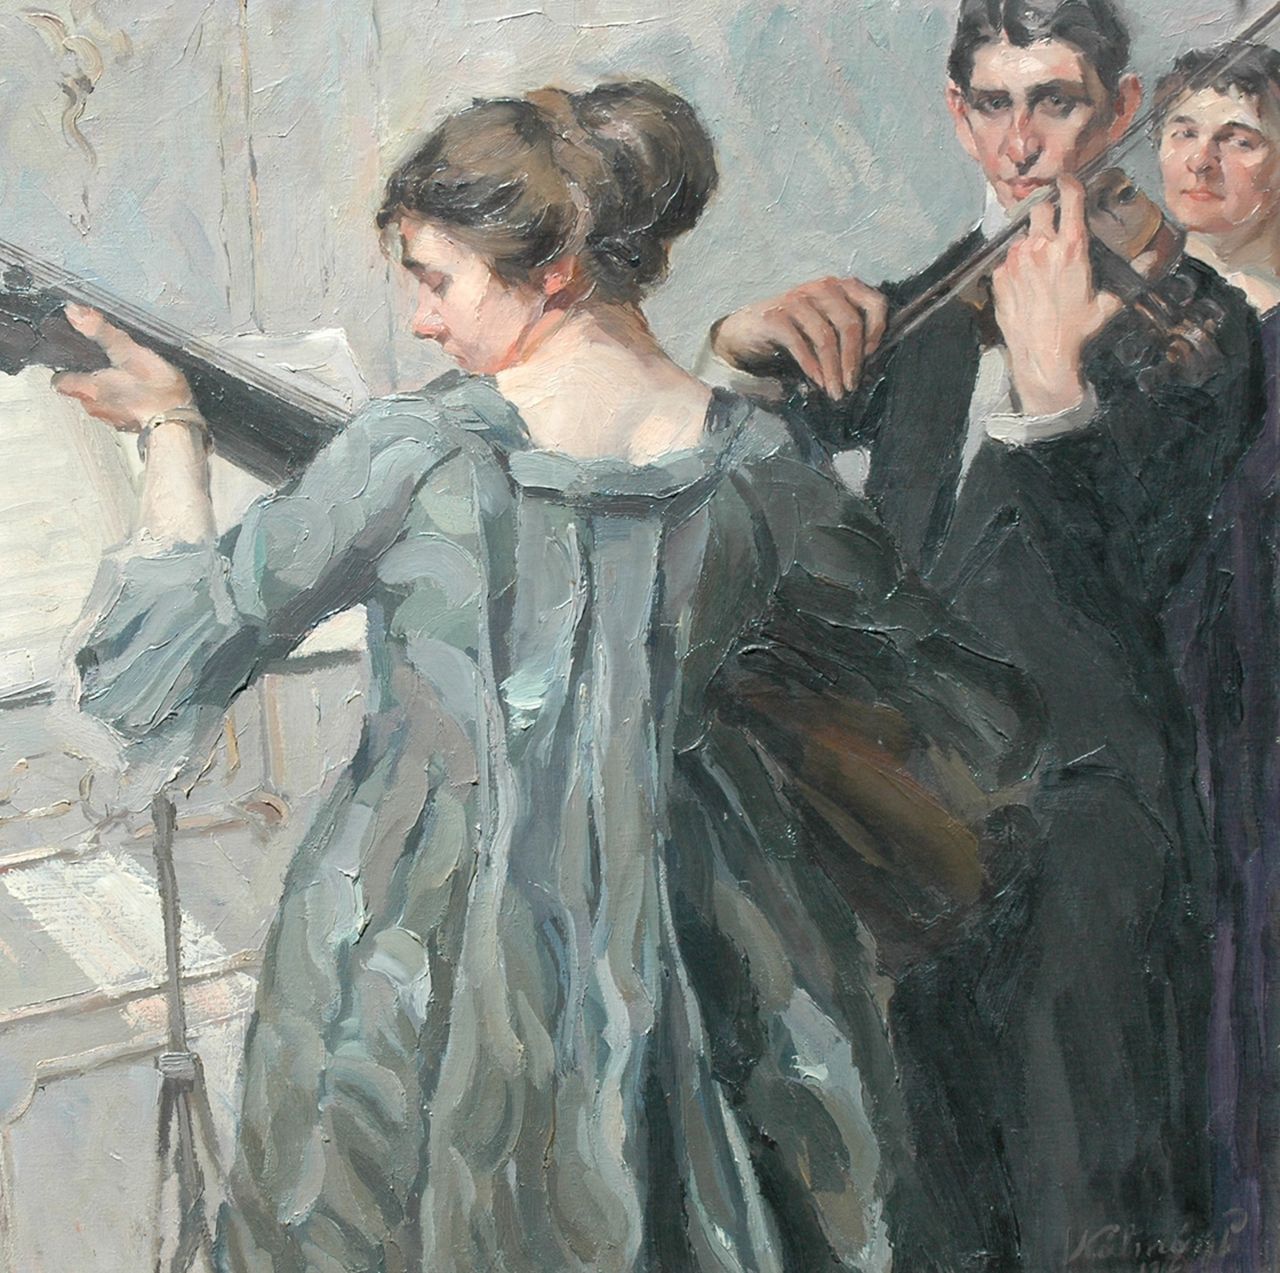 Kálmán P.  | Péter Kálmán, The duet, Öl auf Leinwand 98,6 x 98,9 cm, signed l.r. und dated 1912